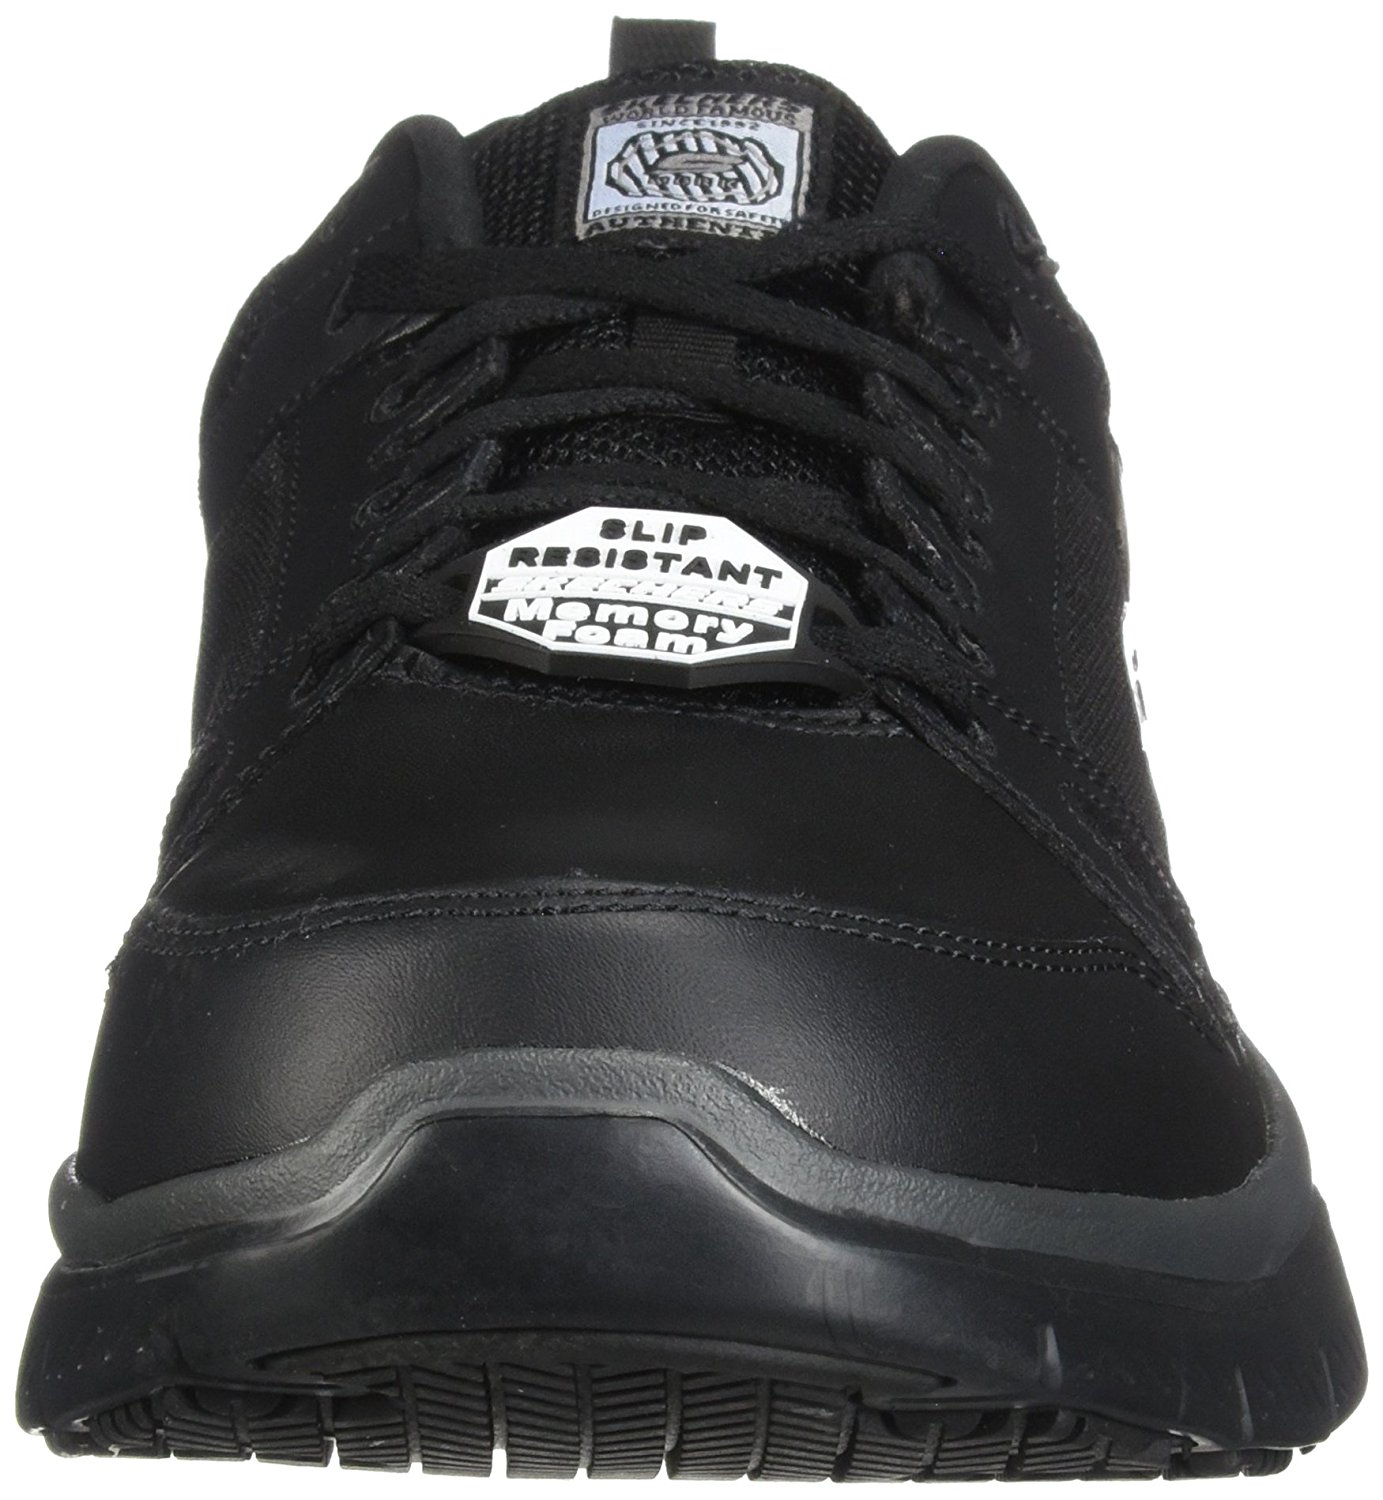 Skechers Mens bendon Fabric Soft toe Slip On Safety Shoes, Black, Size ...